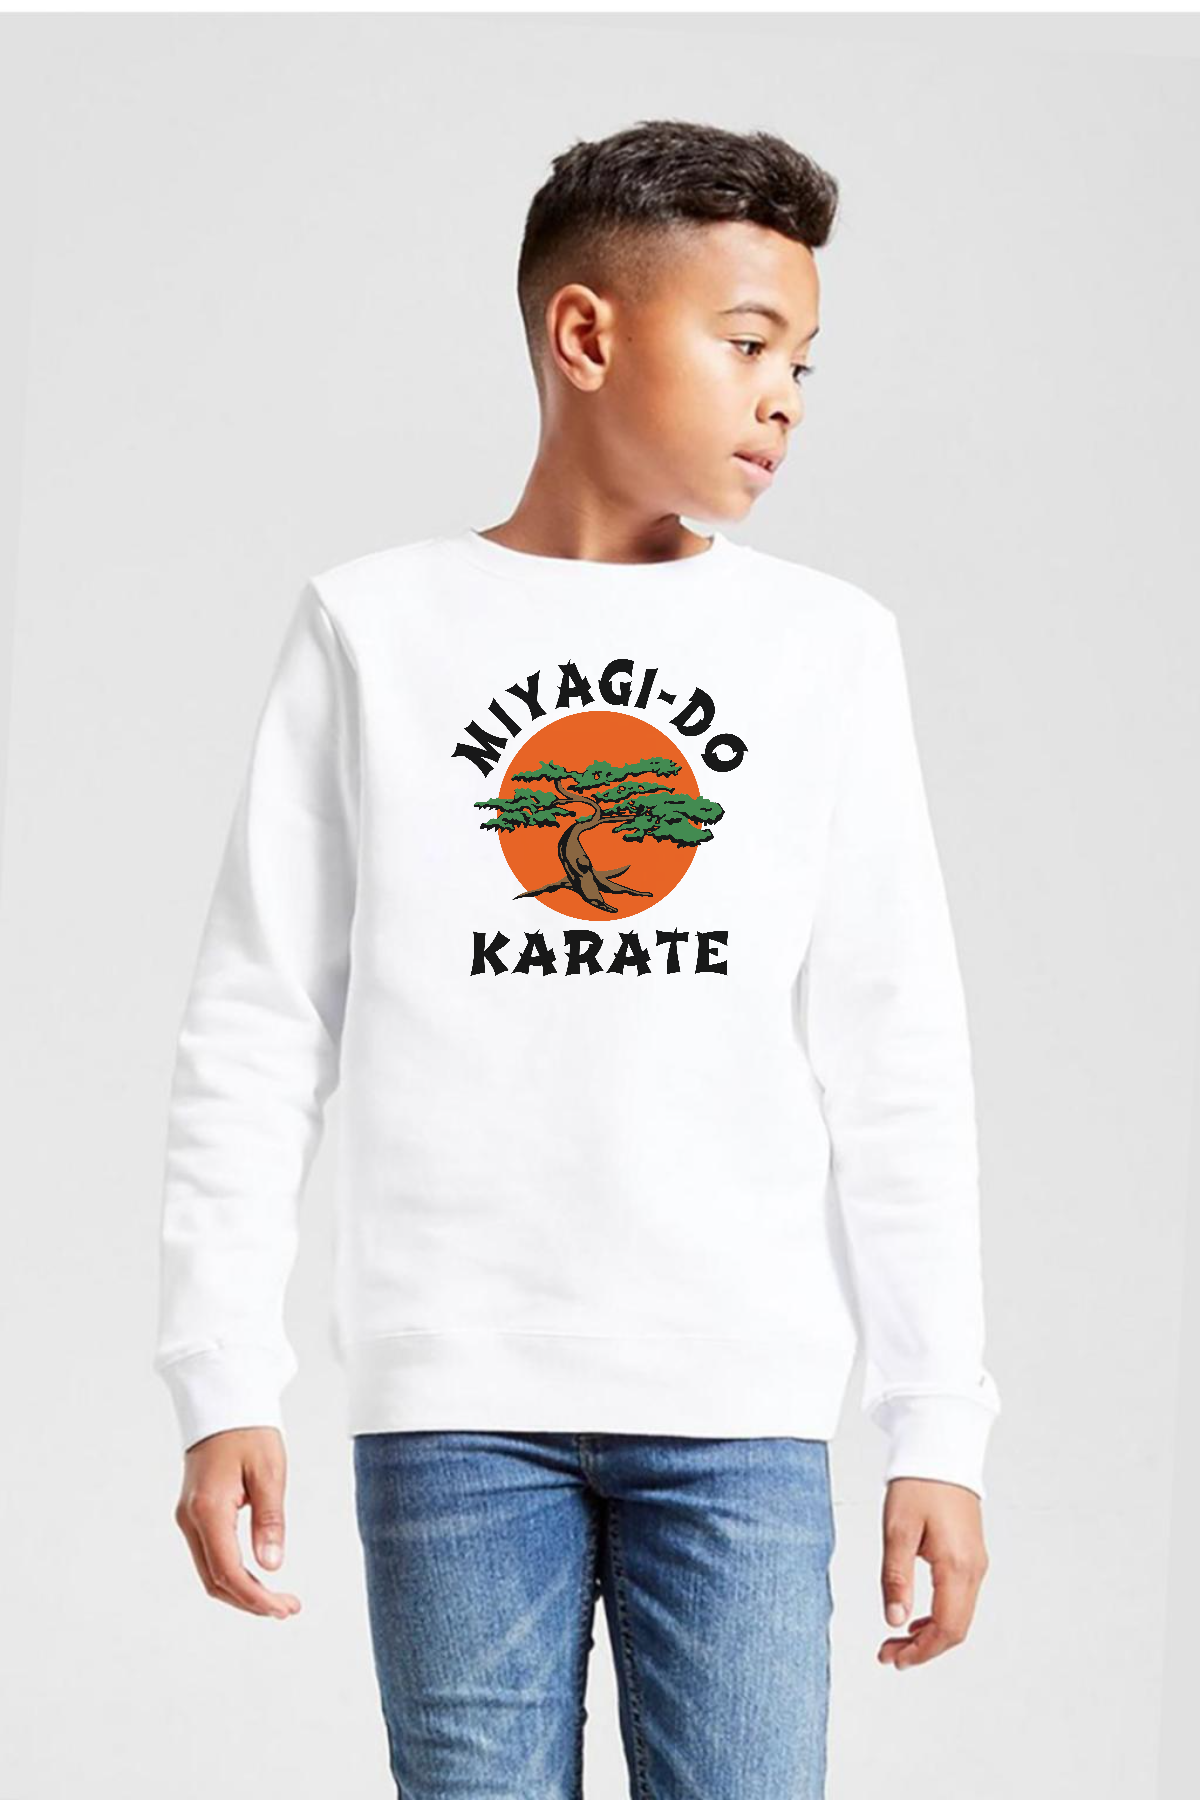 Cobra Kai Miyagi Do Karate Beyaz Çocuk 2ip Sweatshirt